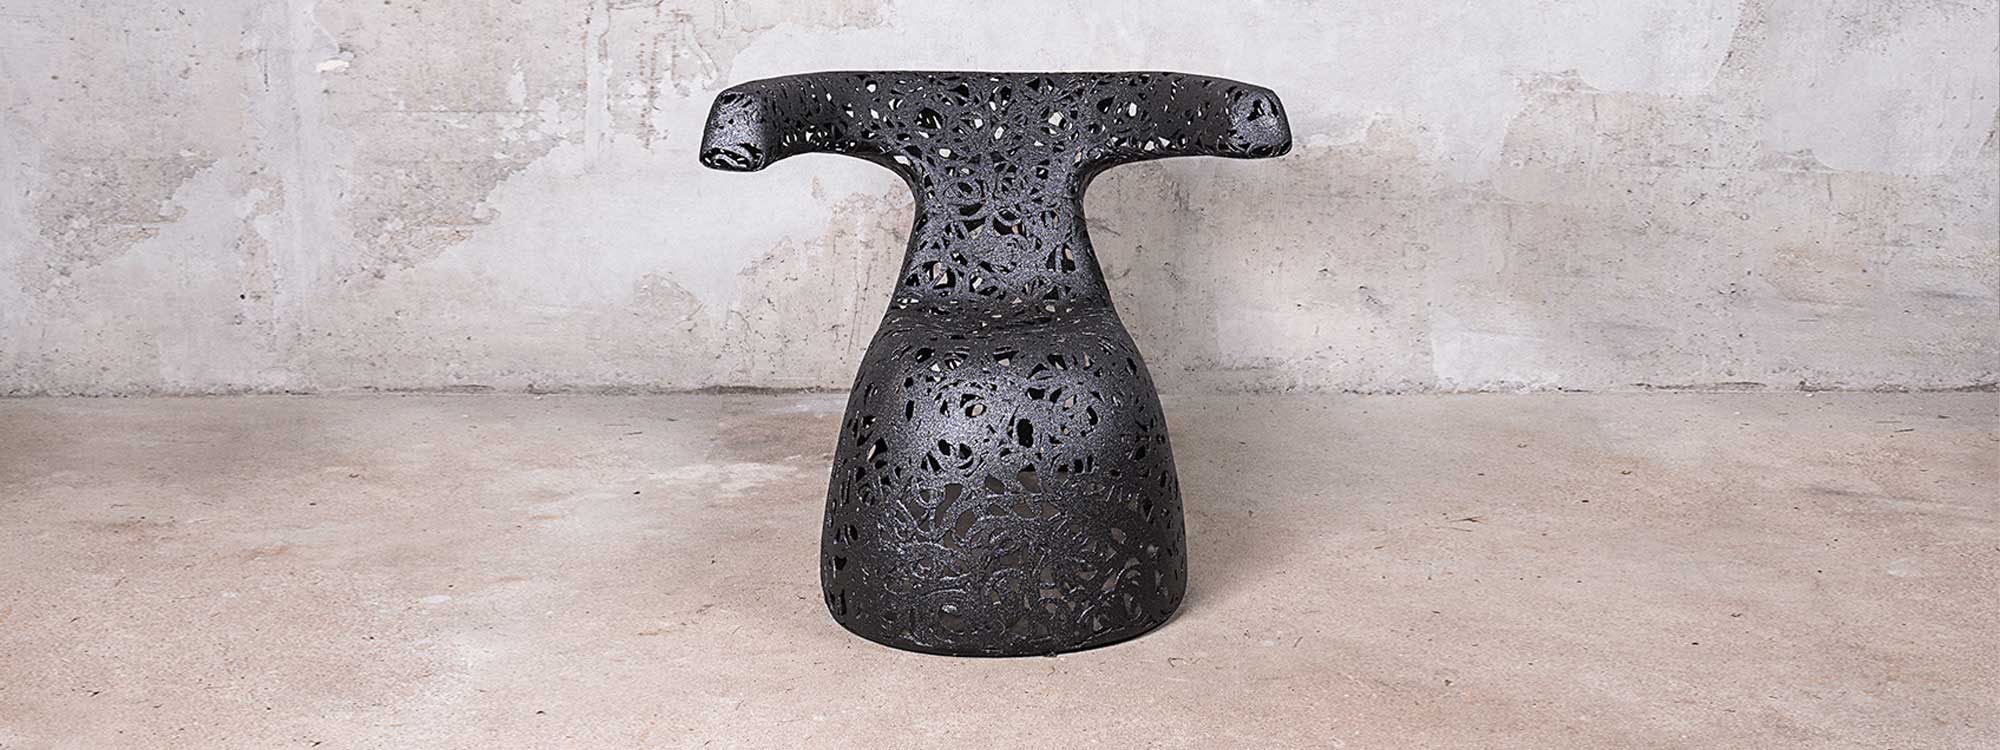 Image of black Hug garden chair in basalt fibre by Unknown Nordic outdoor furniture